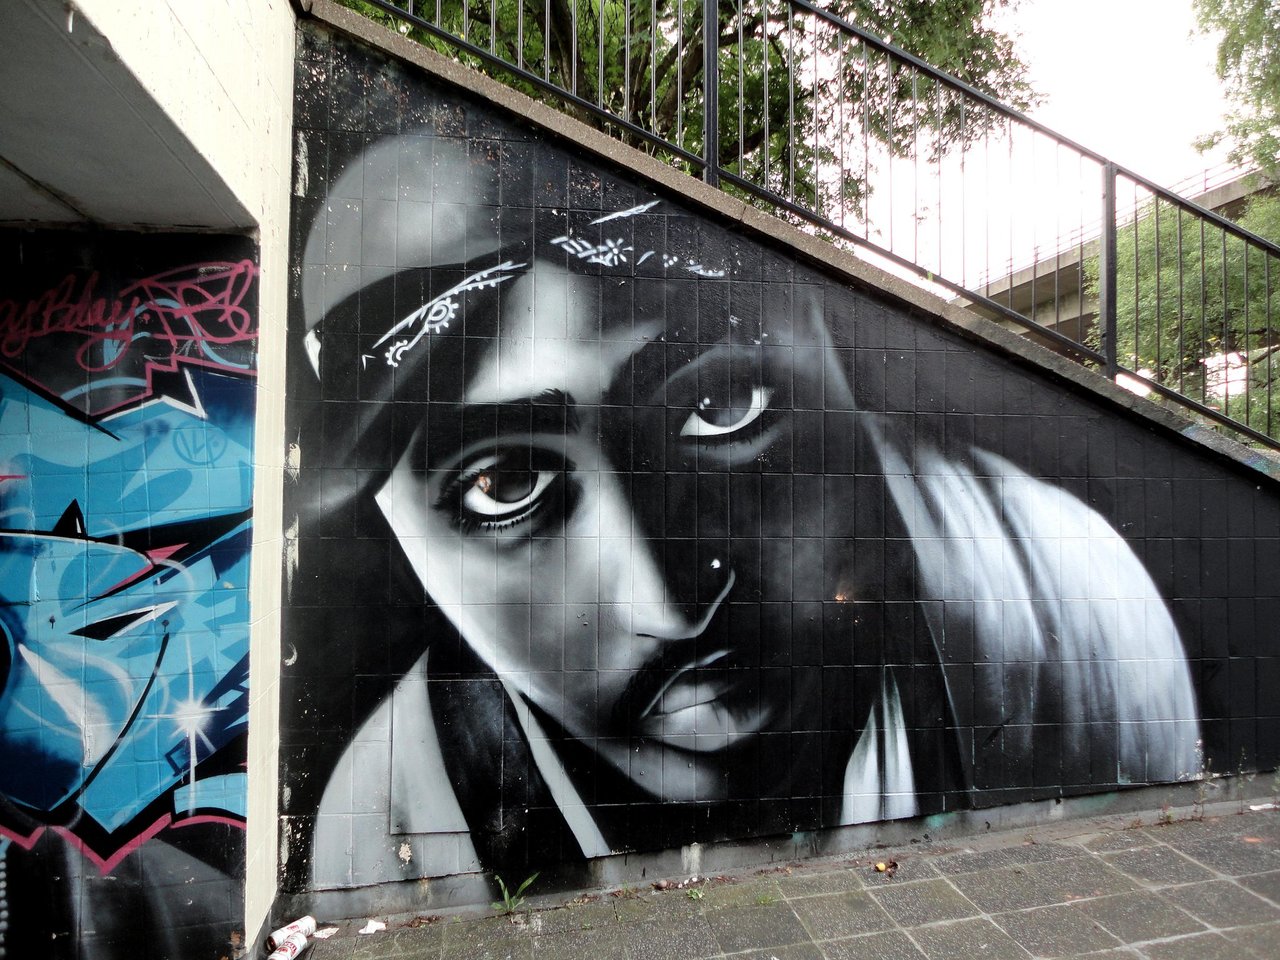 Tupac by Omega

#graffiti #graff #mural #art #arte #Birmingham #tupacart #streetart #ukgraffiti http://t.co/4ahYLIIzTJ